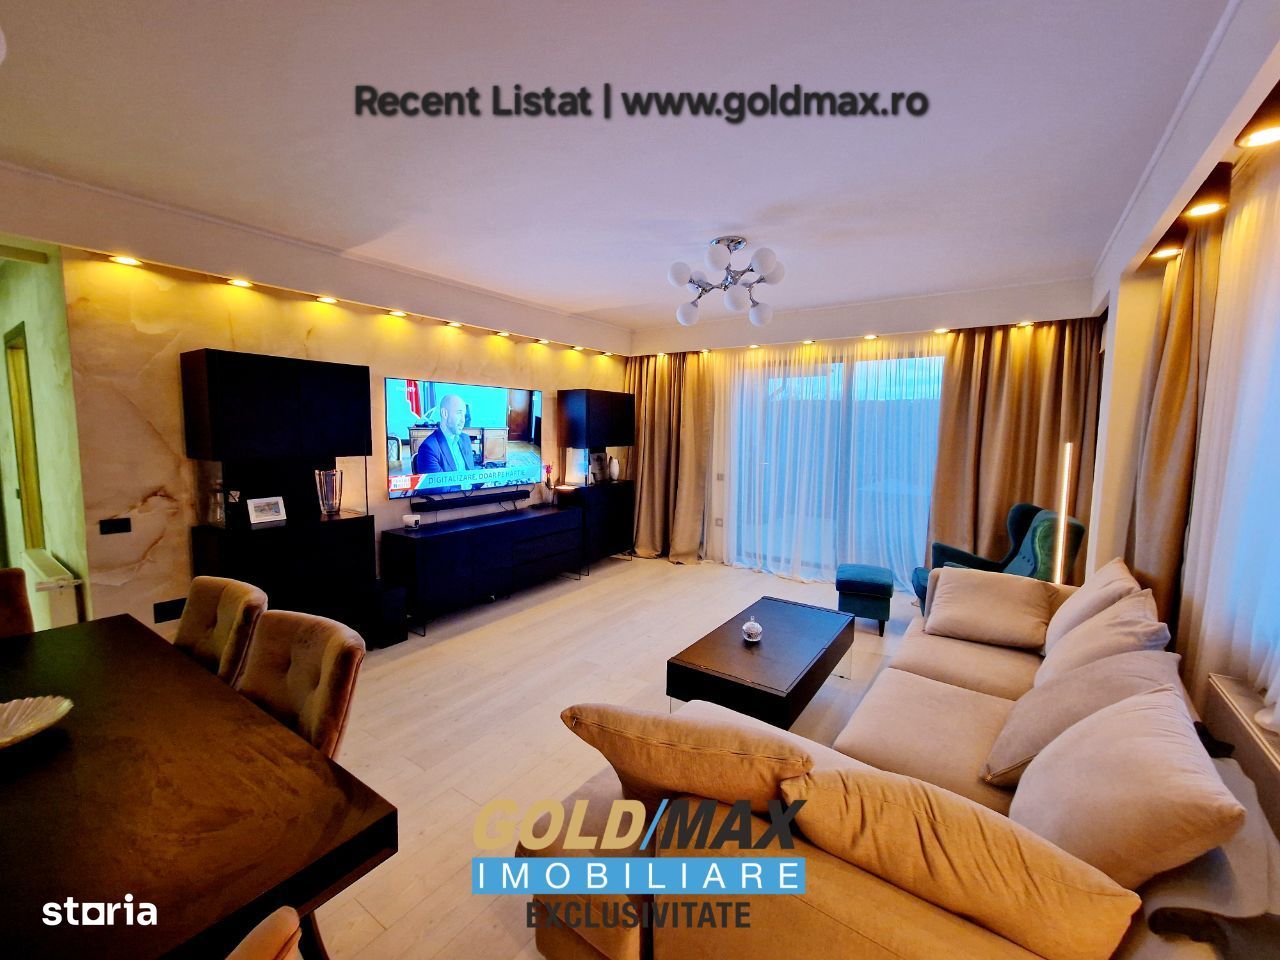 Penthouse ultralux | Exclusivitate | goldmax.ro